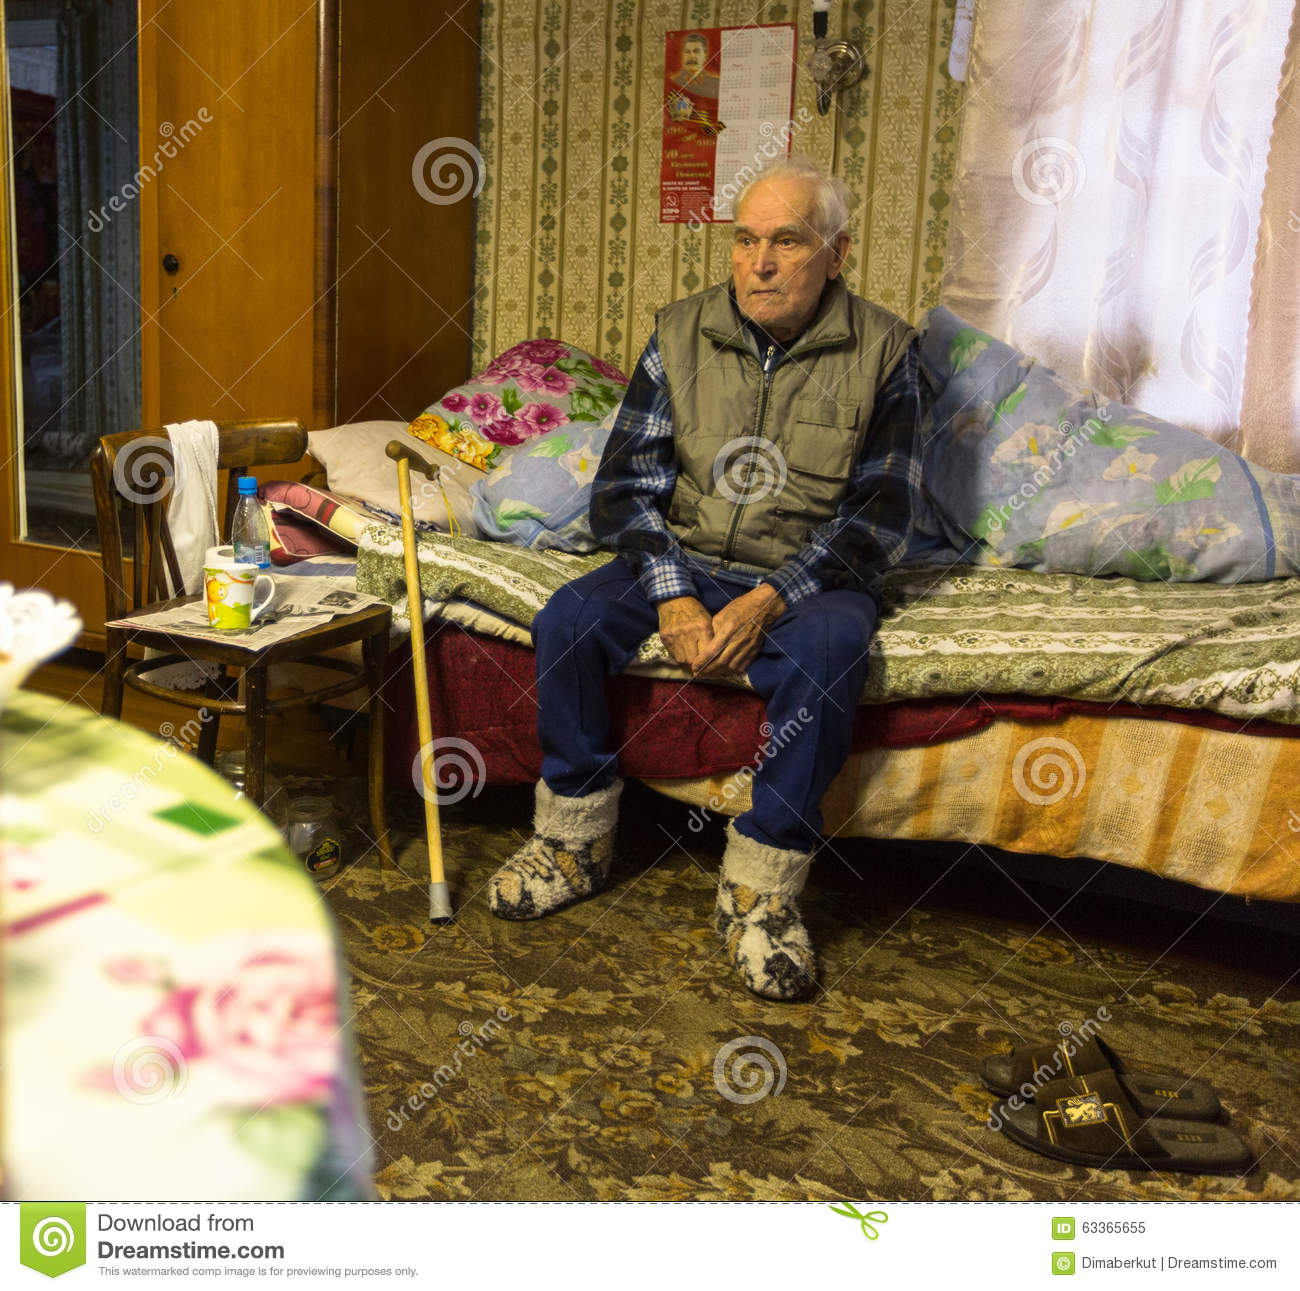 elderly-man-veps-small-finno-ugric-peoples-living-territory-leningrad-region-russia-vinnitsy-n...jpg